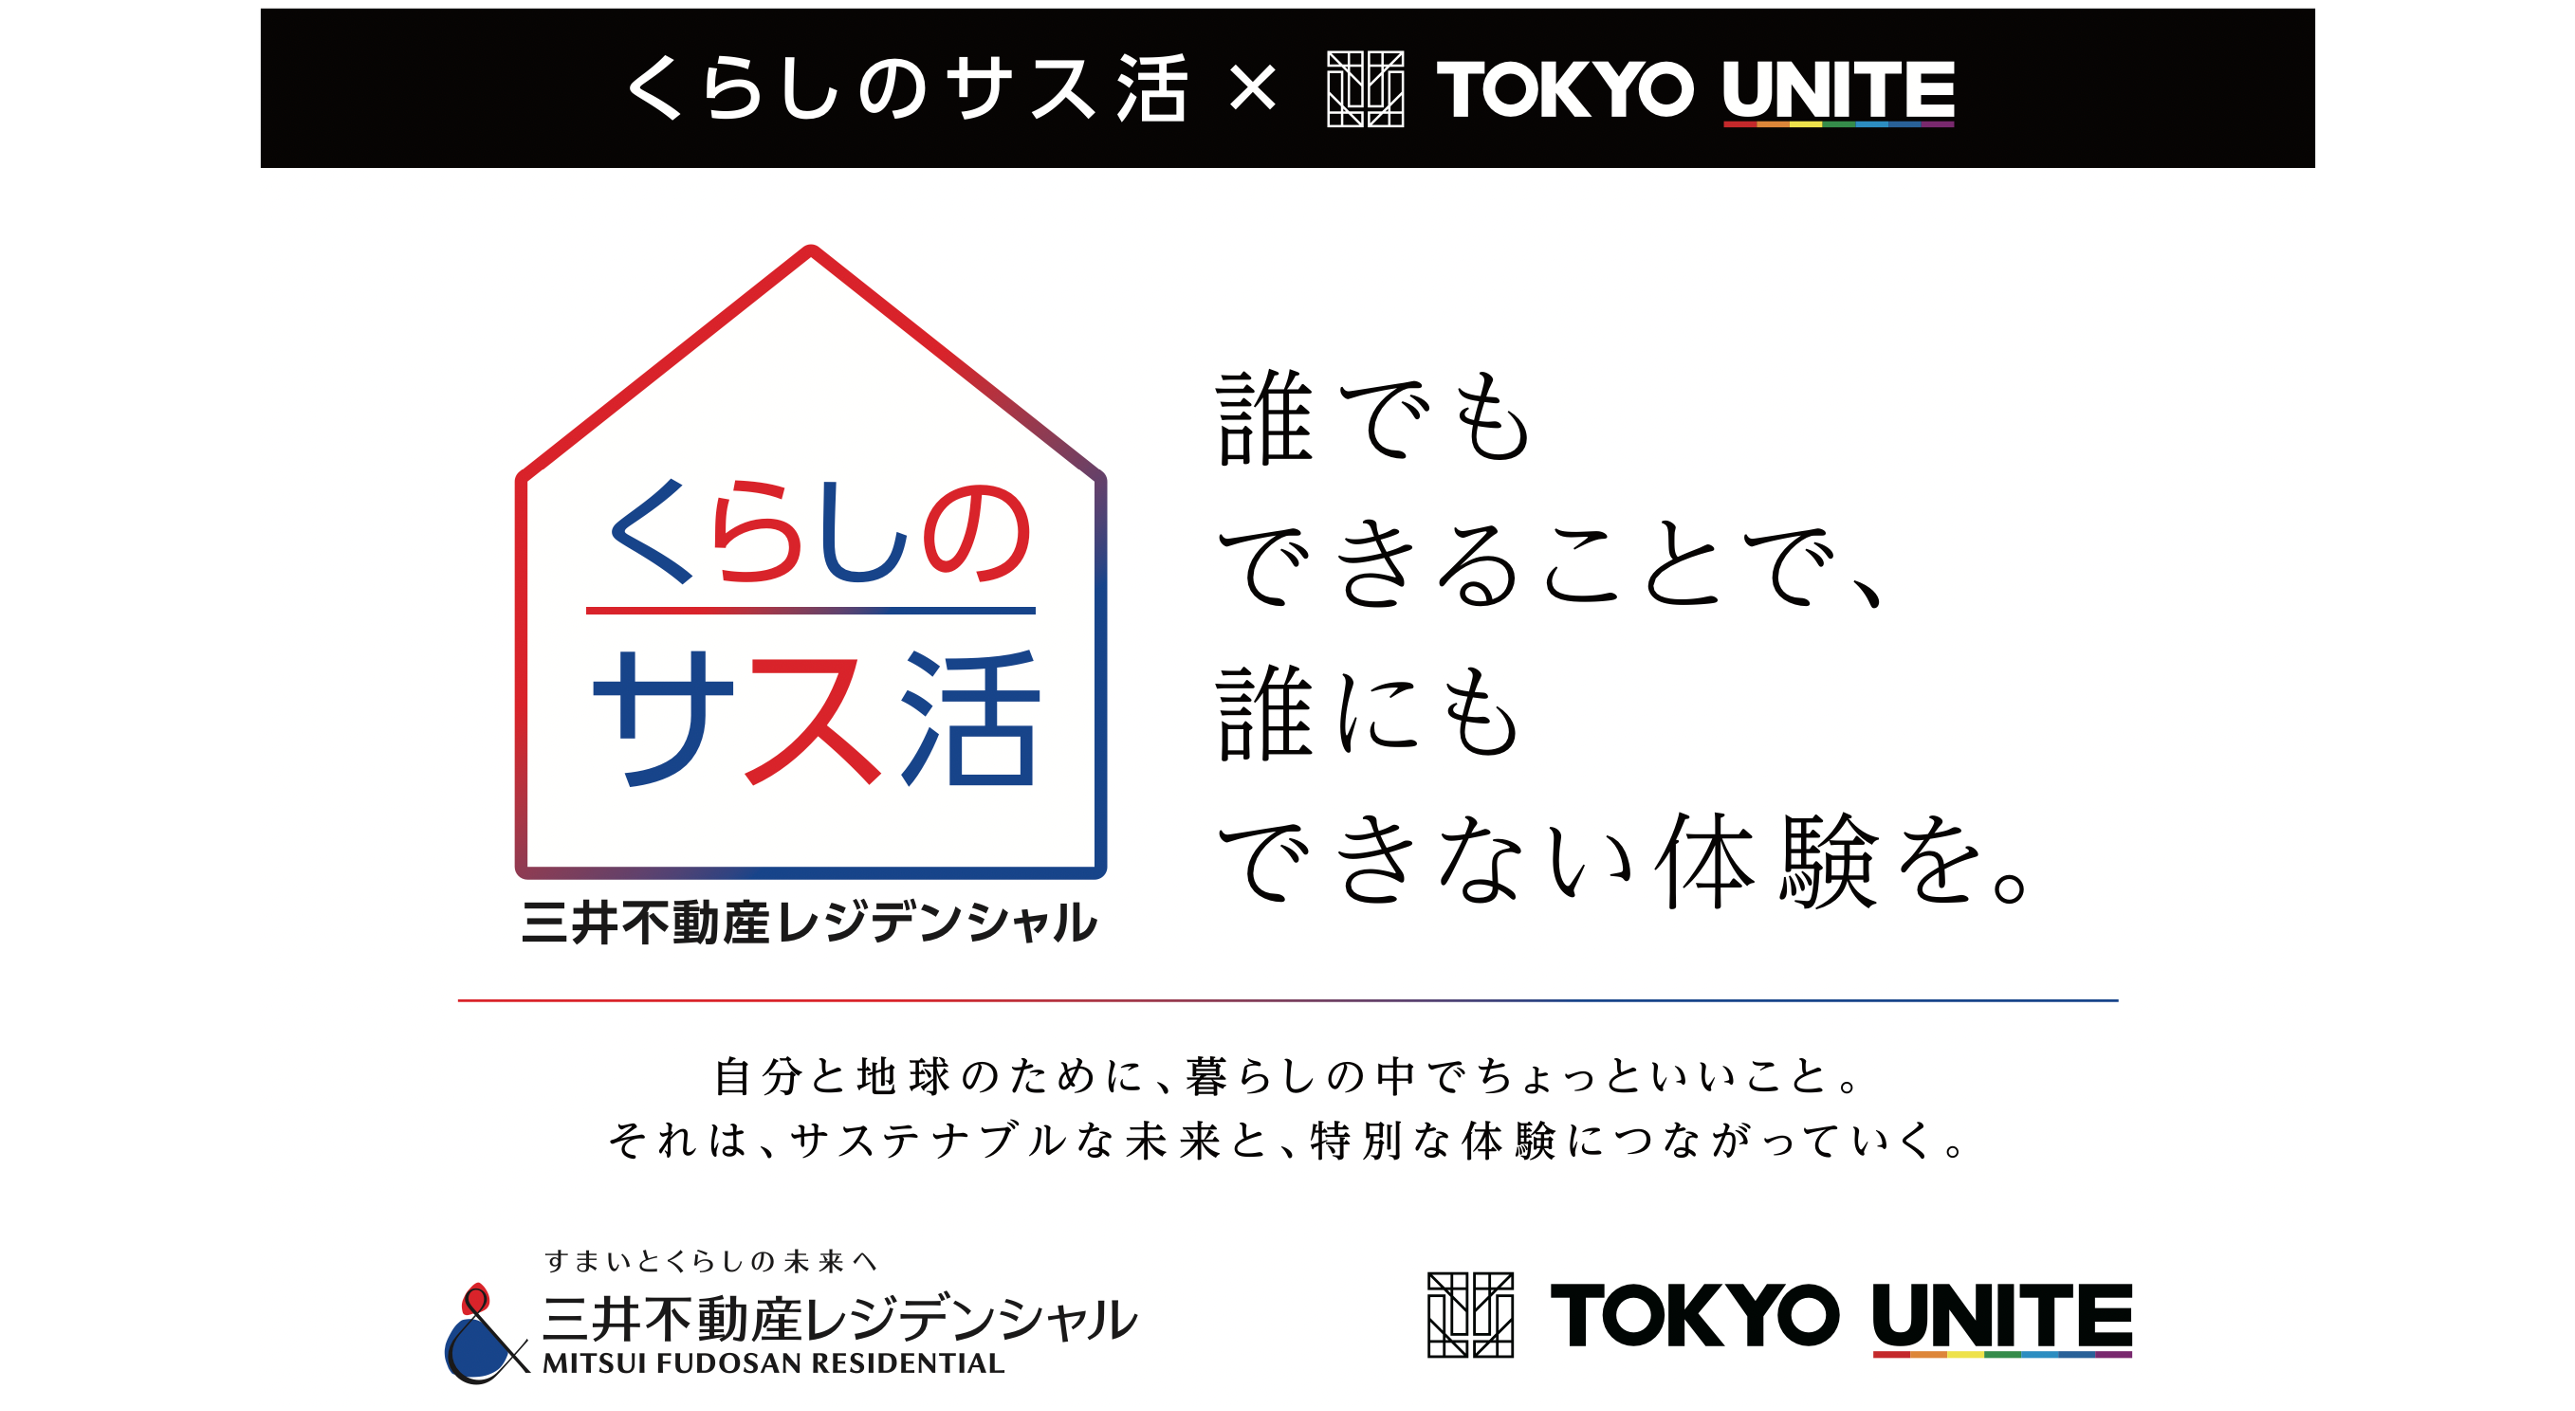 TOKYO UNITEキッズスポーツフェスで脱炭素活動について学ぶ「サス活クイズチャレンジ」を開催